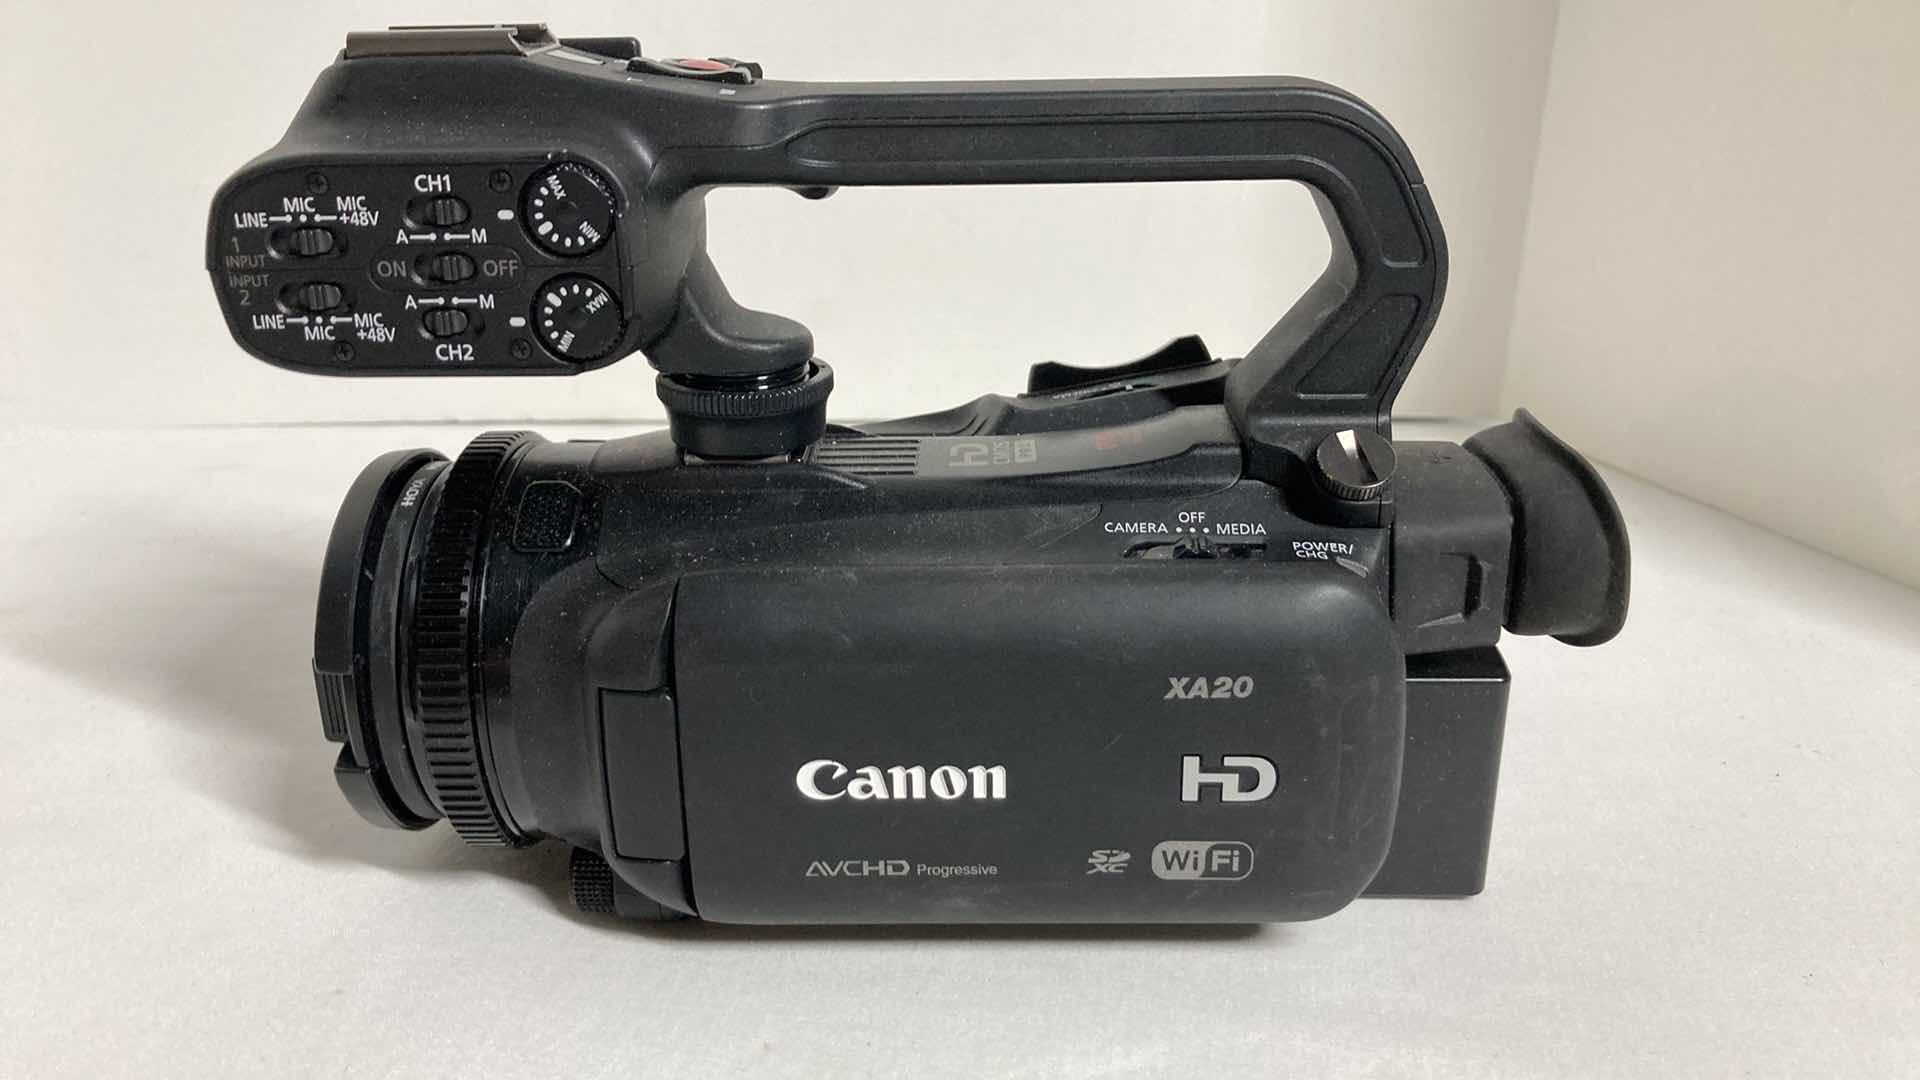 Photo 2 of CANON AVC HD PROGRESSIVE VIDEO CAMERA MODEL XA20 W RODE MICROPHONE & BAG